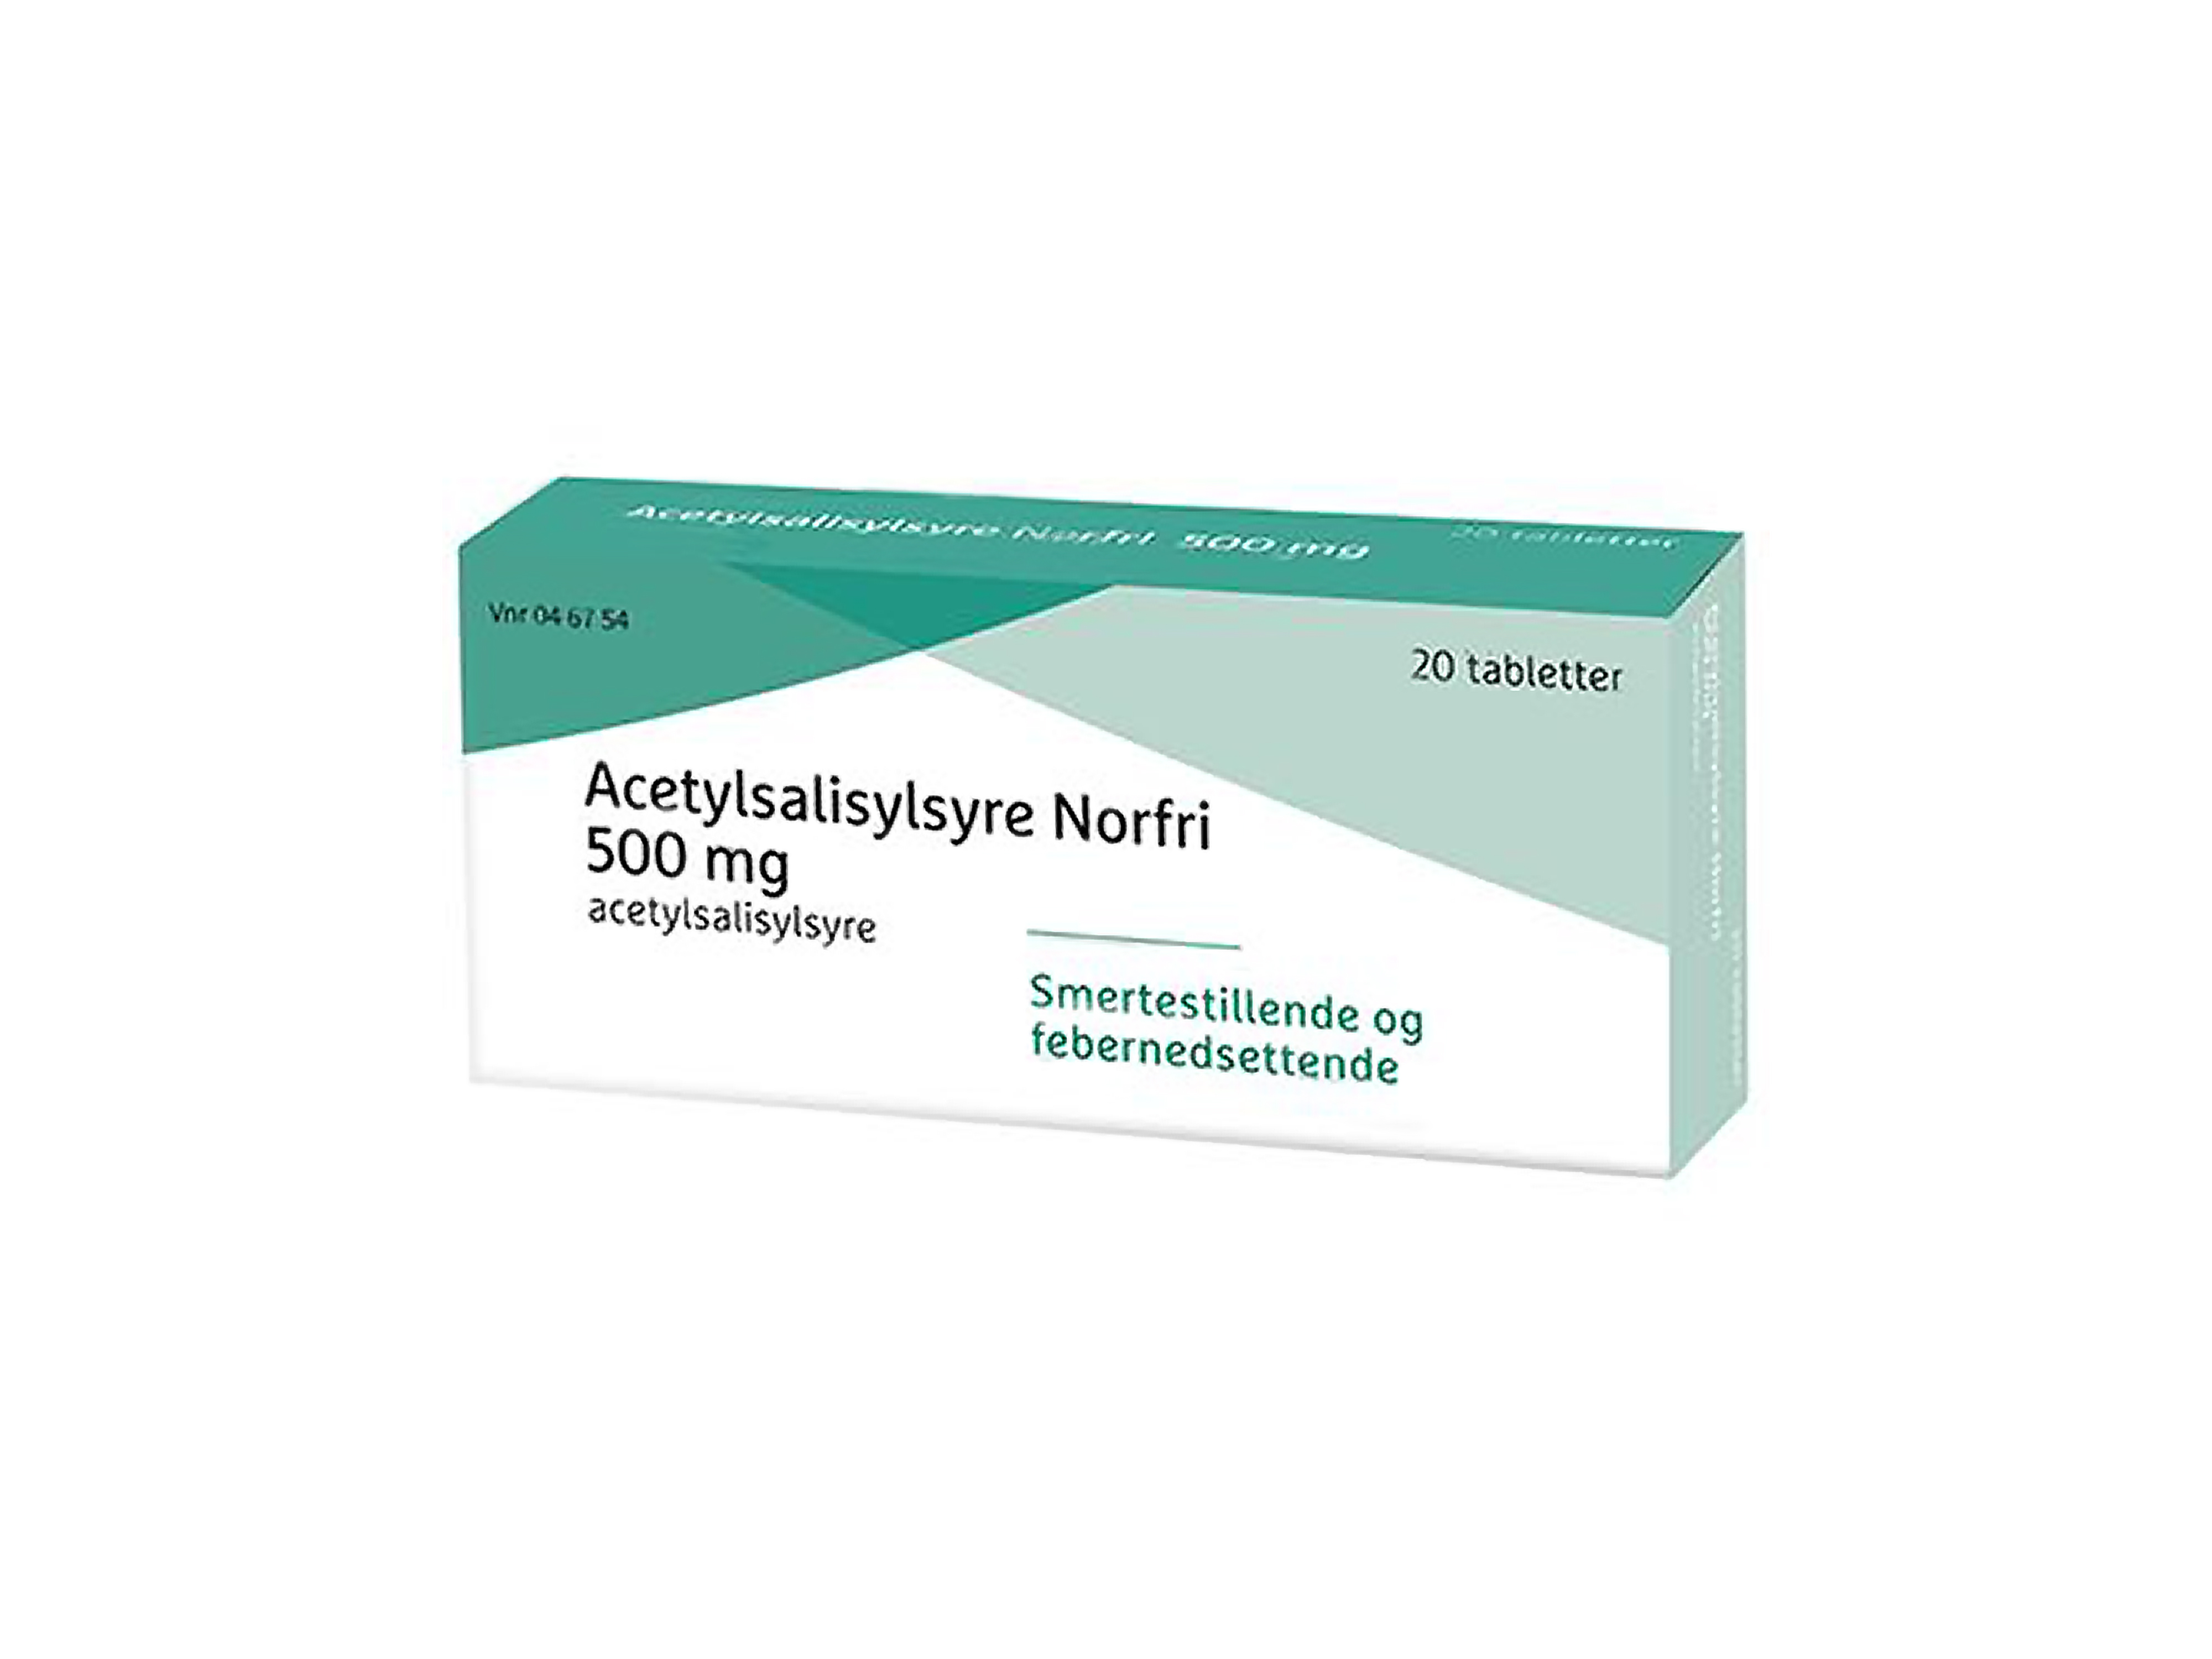 Acetylsalisylsyre Norfri 500 mg tabletter, 20 stk.